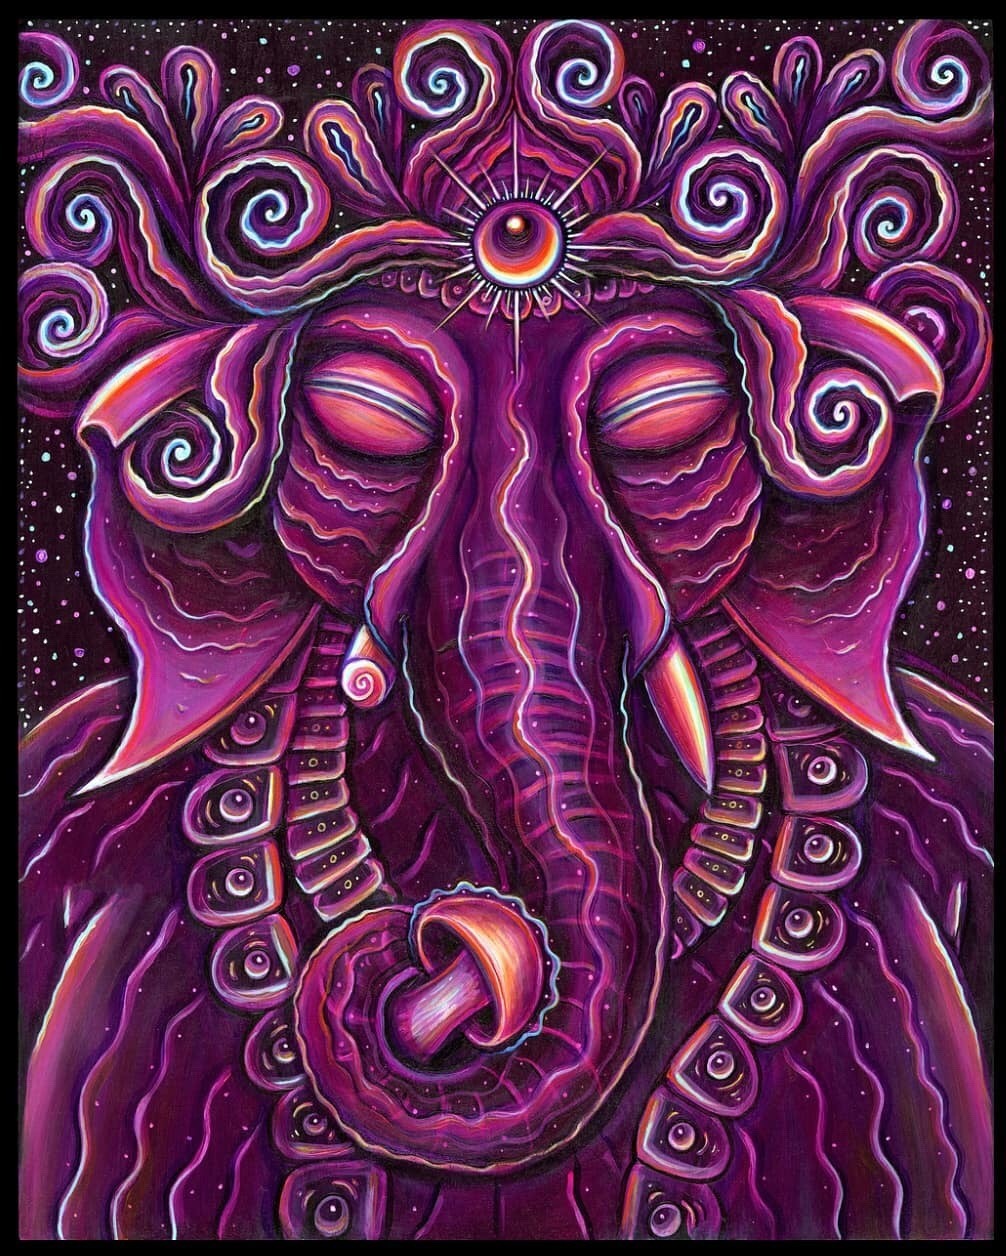 ॐ ~ — “Sleepin Ganesha” by John Speaker